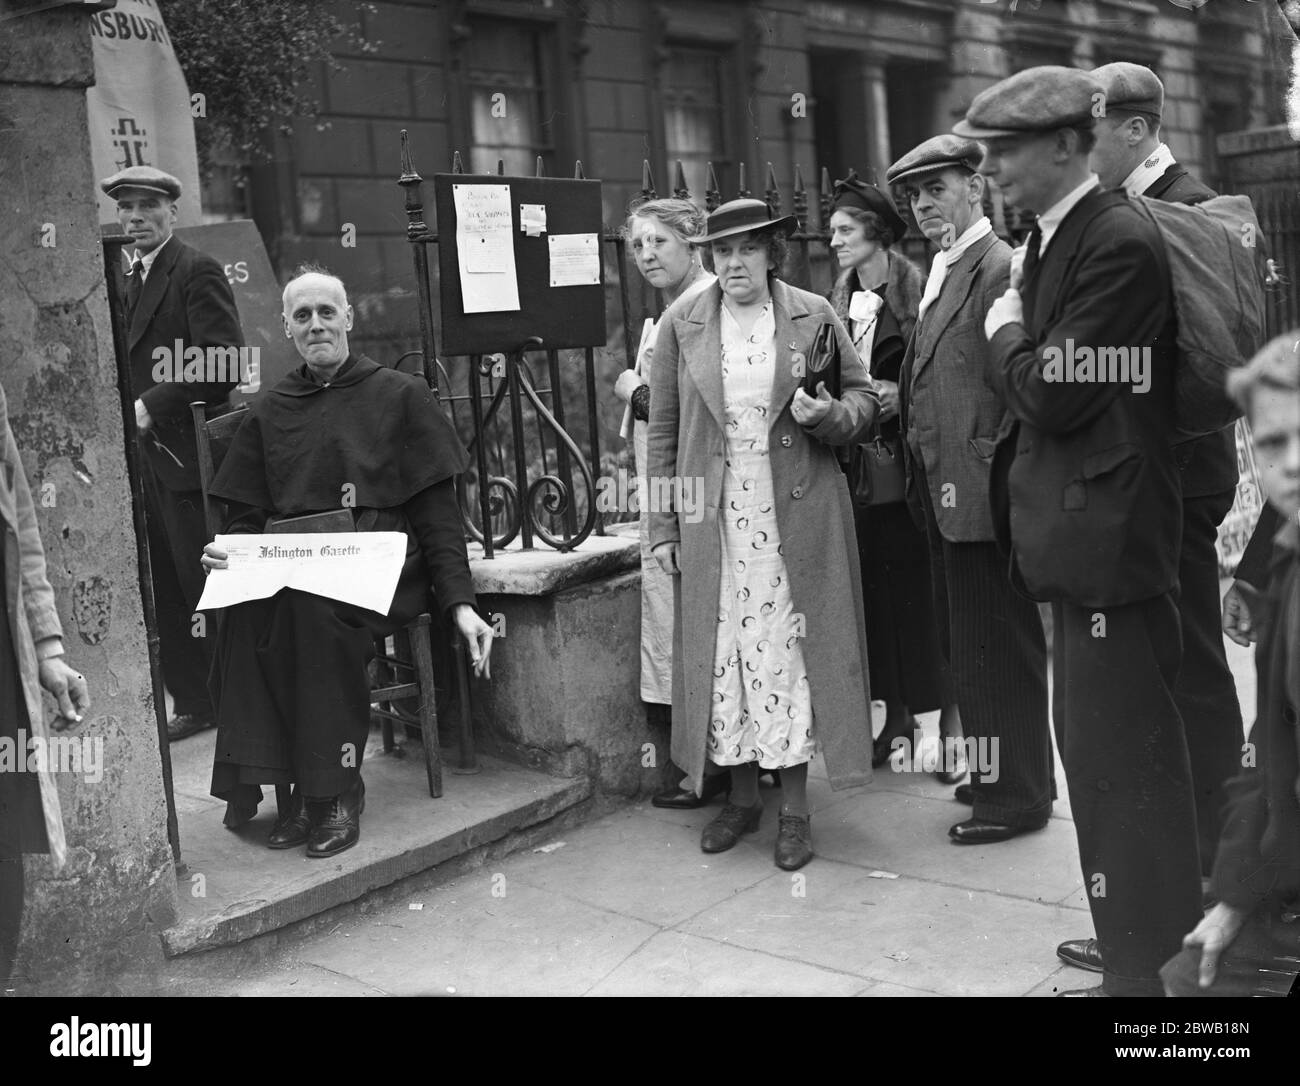 Der Reverend E O Iredell in der Veranda der St. Clement ' s Kirche, Barnsbury, Islington, um Spenden an die Kirche Fonds zu sammeln. 19 Juli 1938 Stockfoto